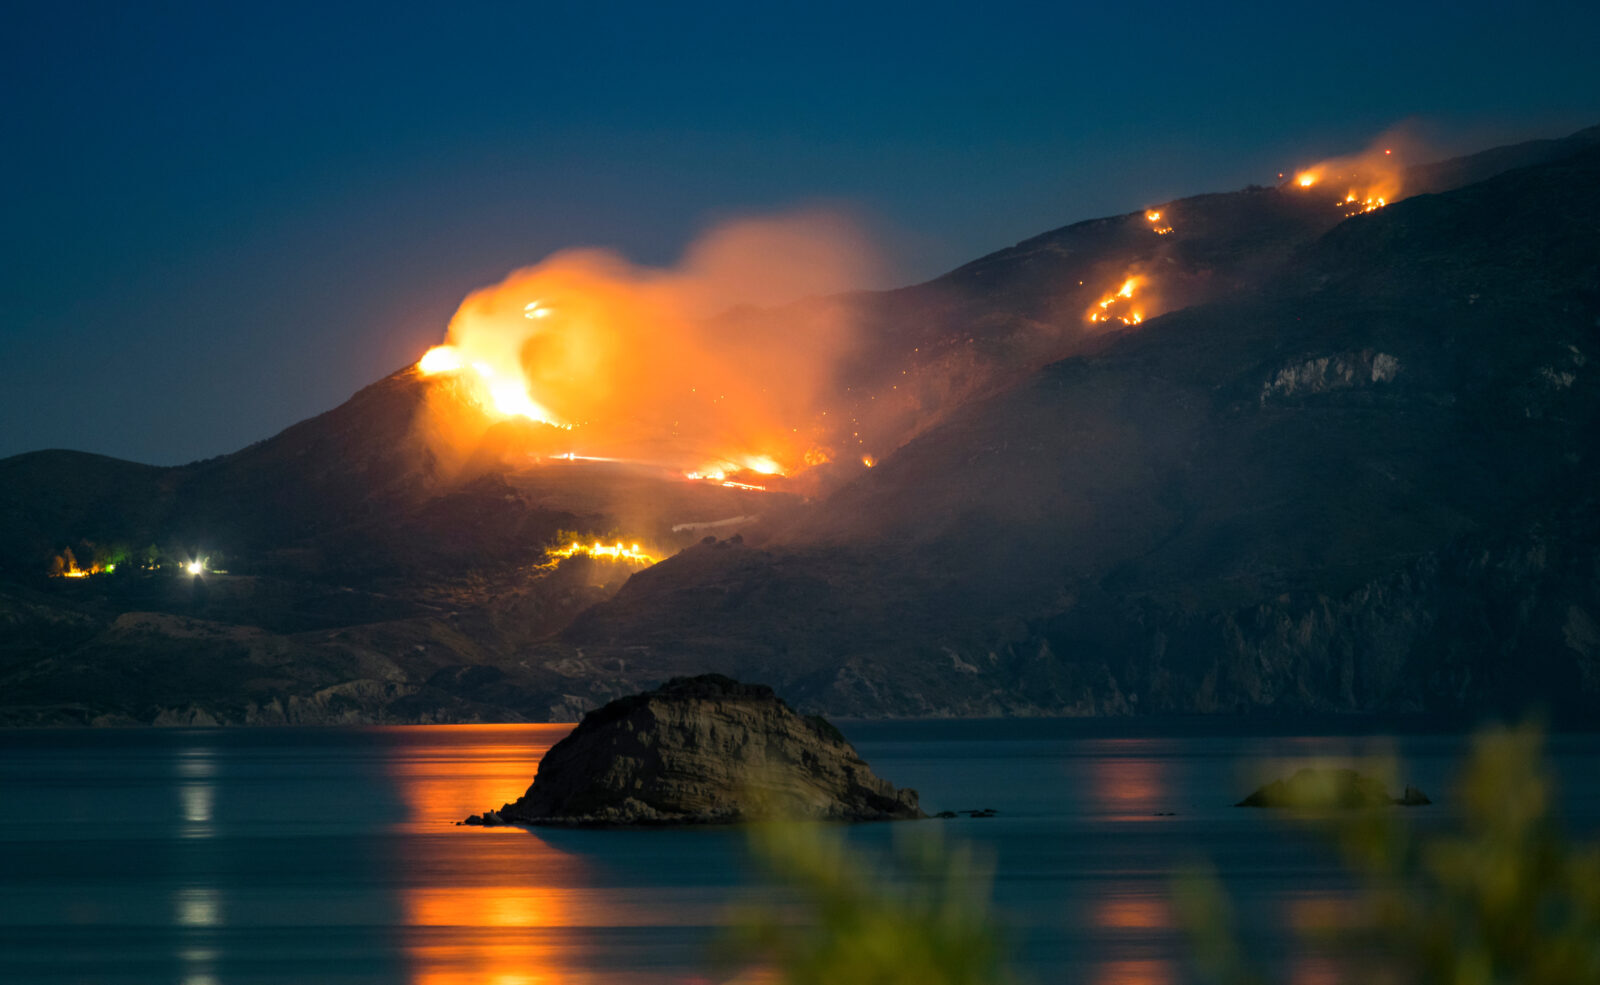 Wildfires in Türkiye, Greece spark tourist concerns, security measures taken